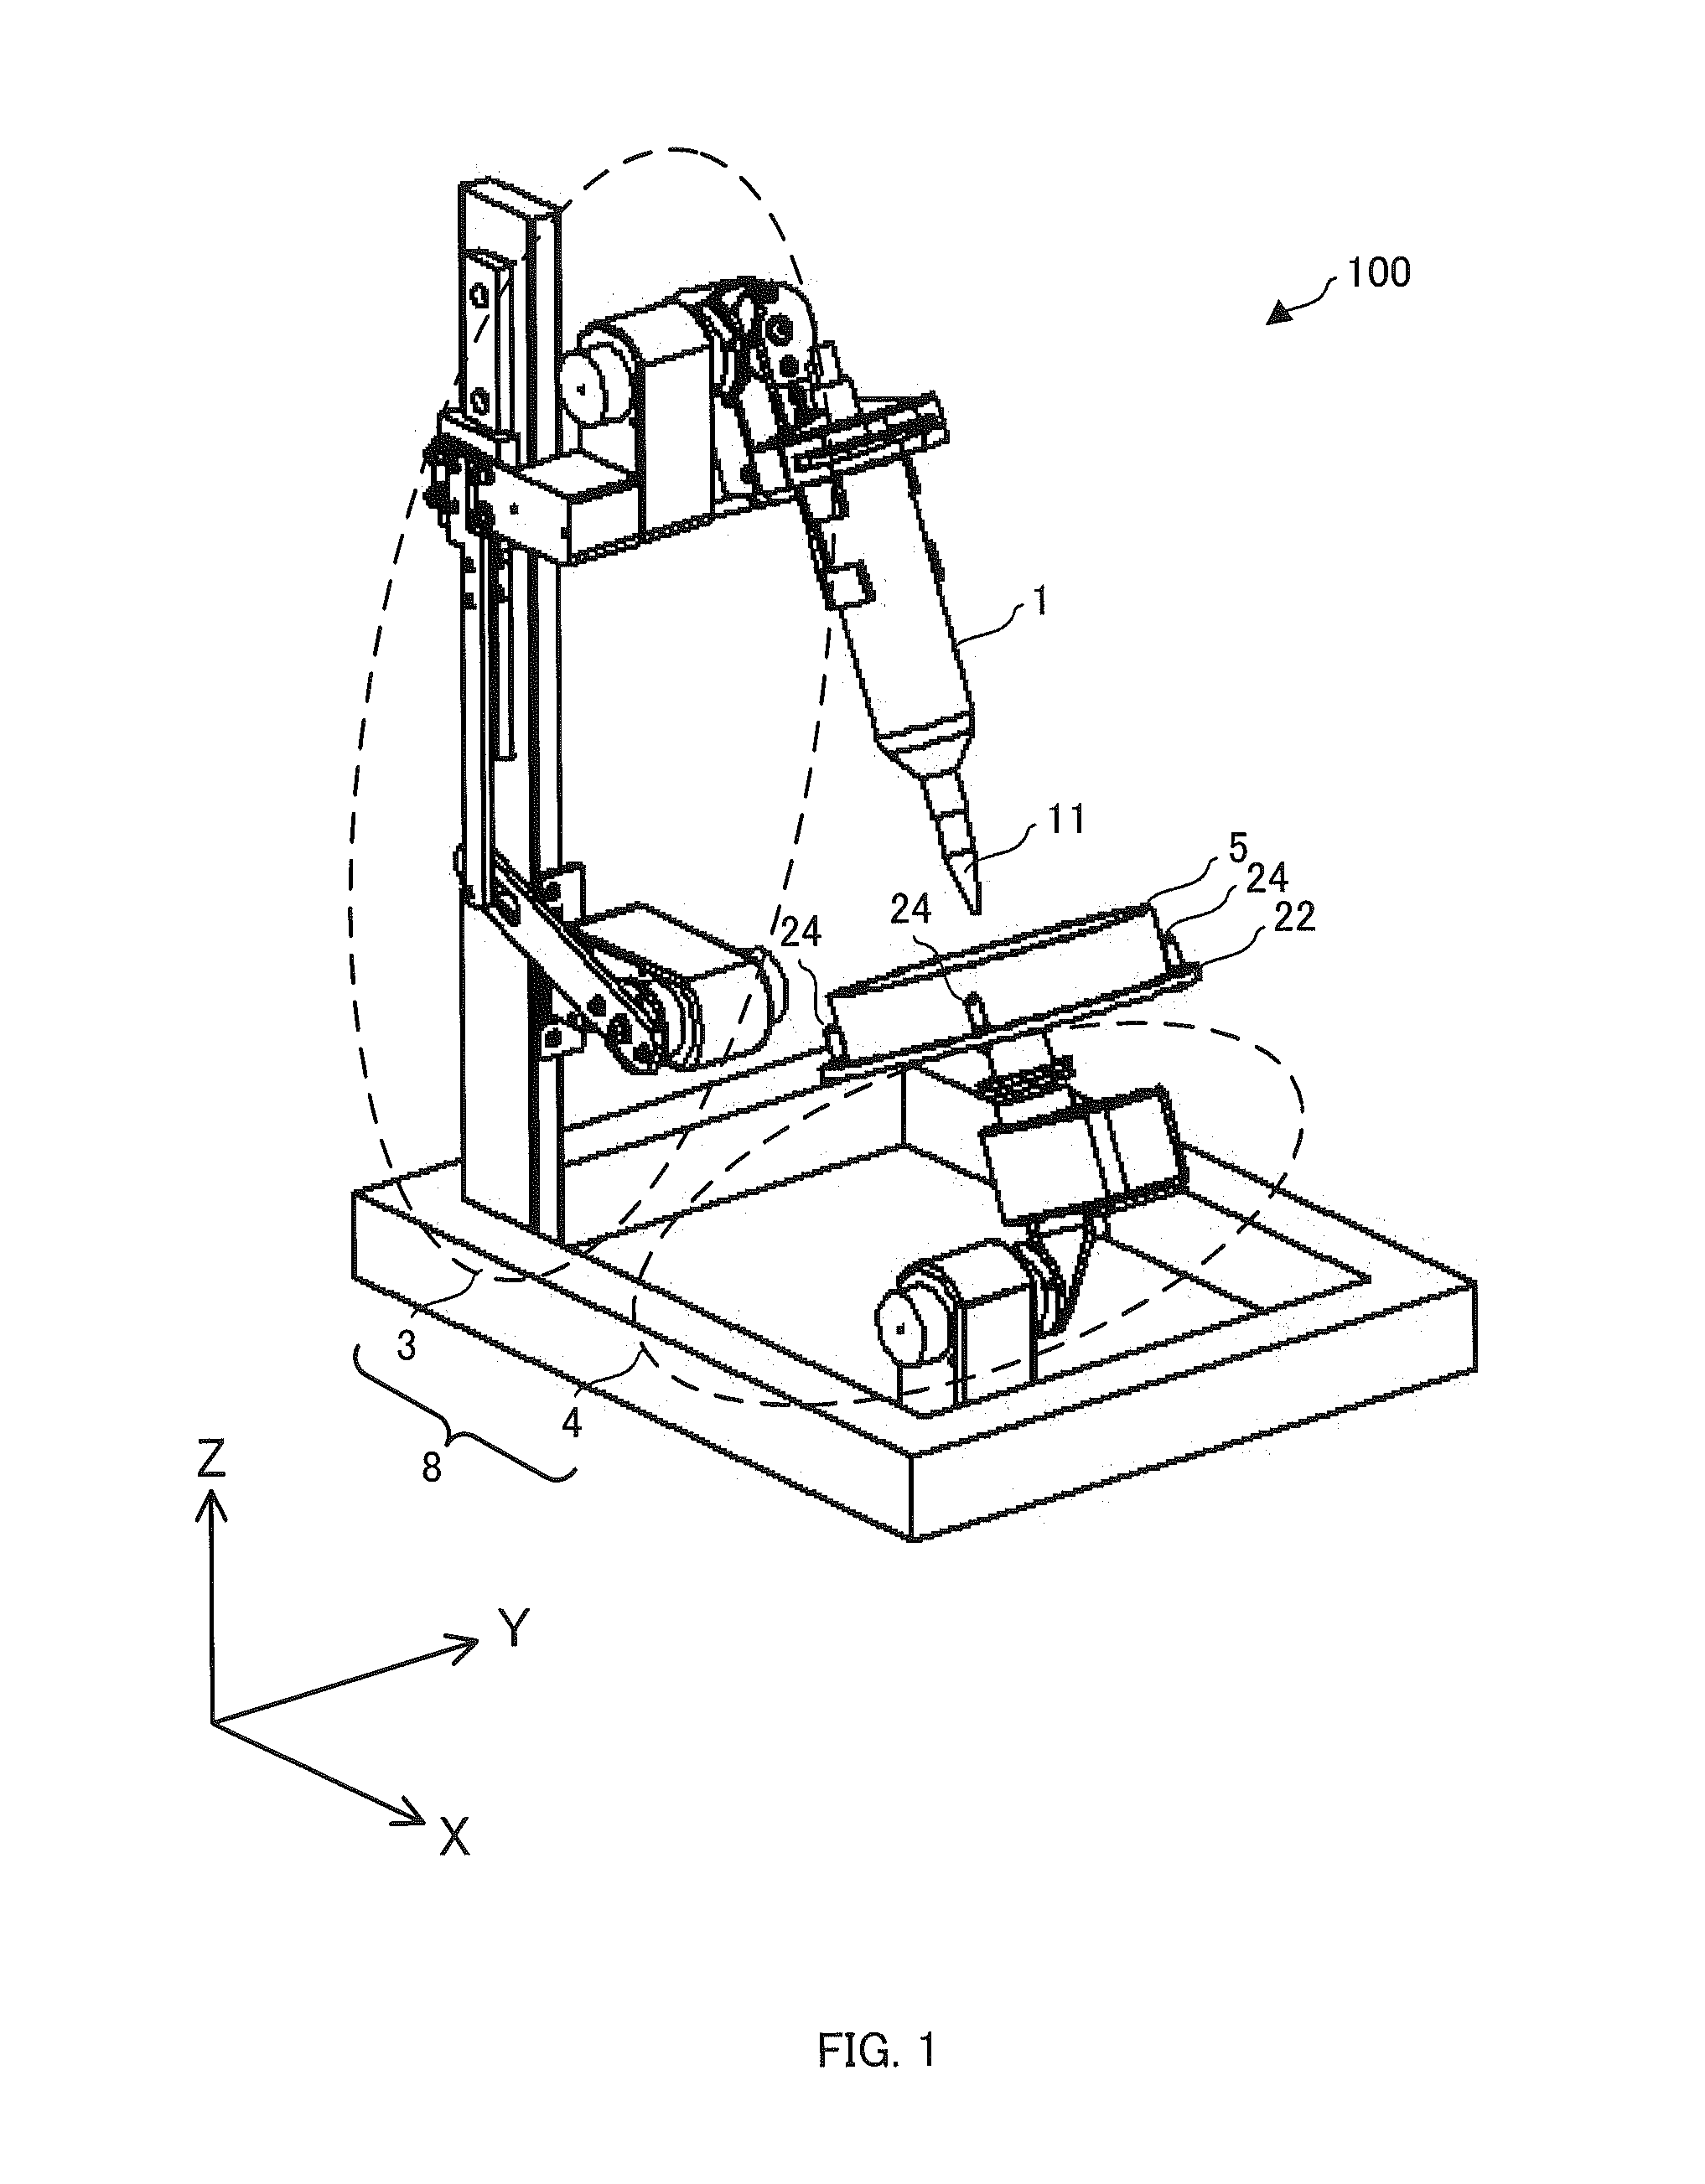 Dispensing apparatus